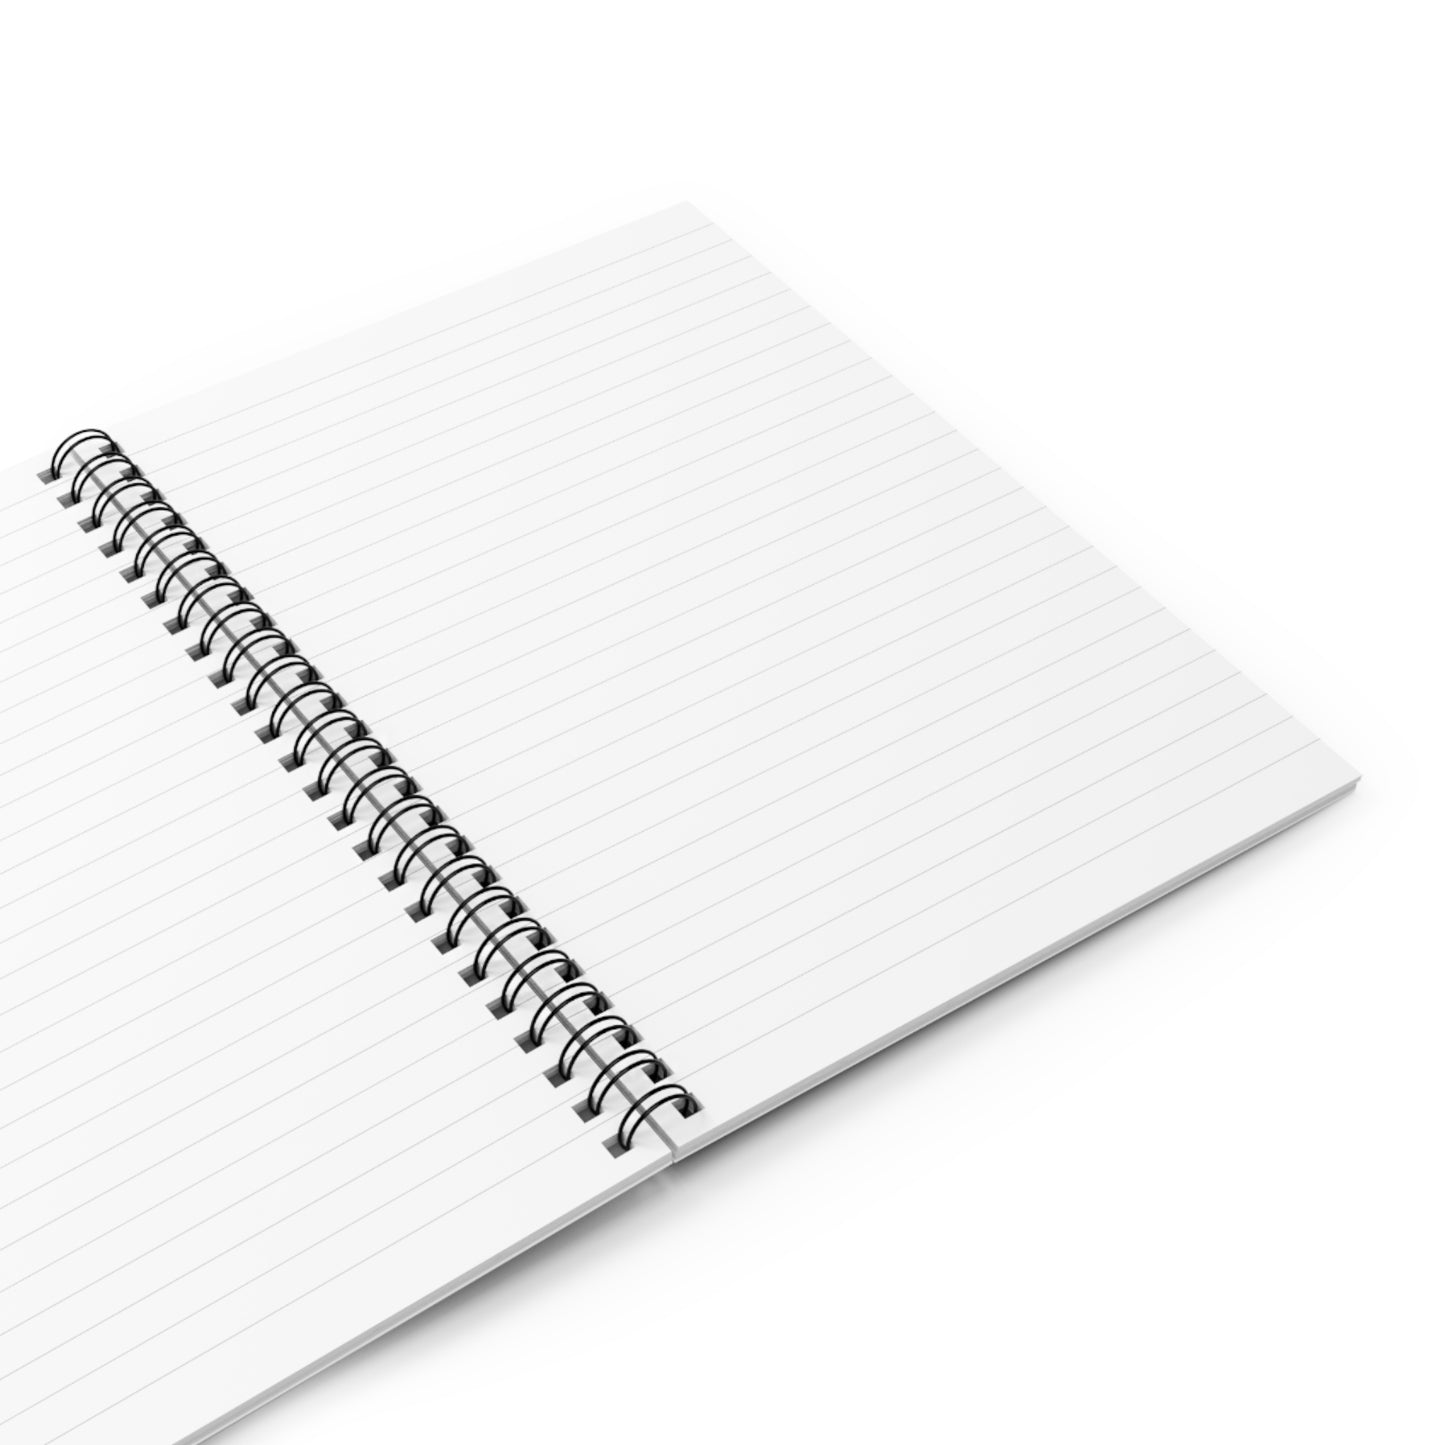 Edwards Managed Technology Spiral Notebook - Ruled Line